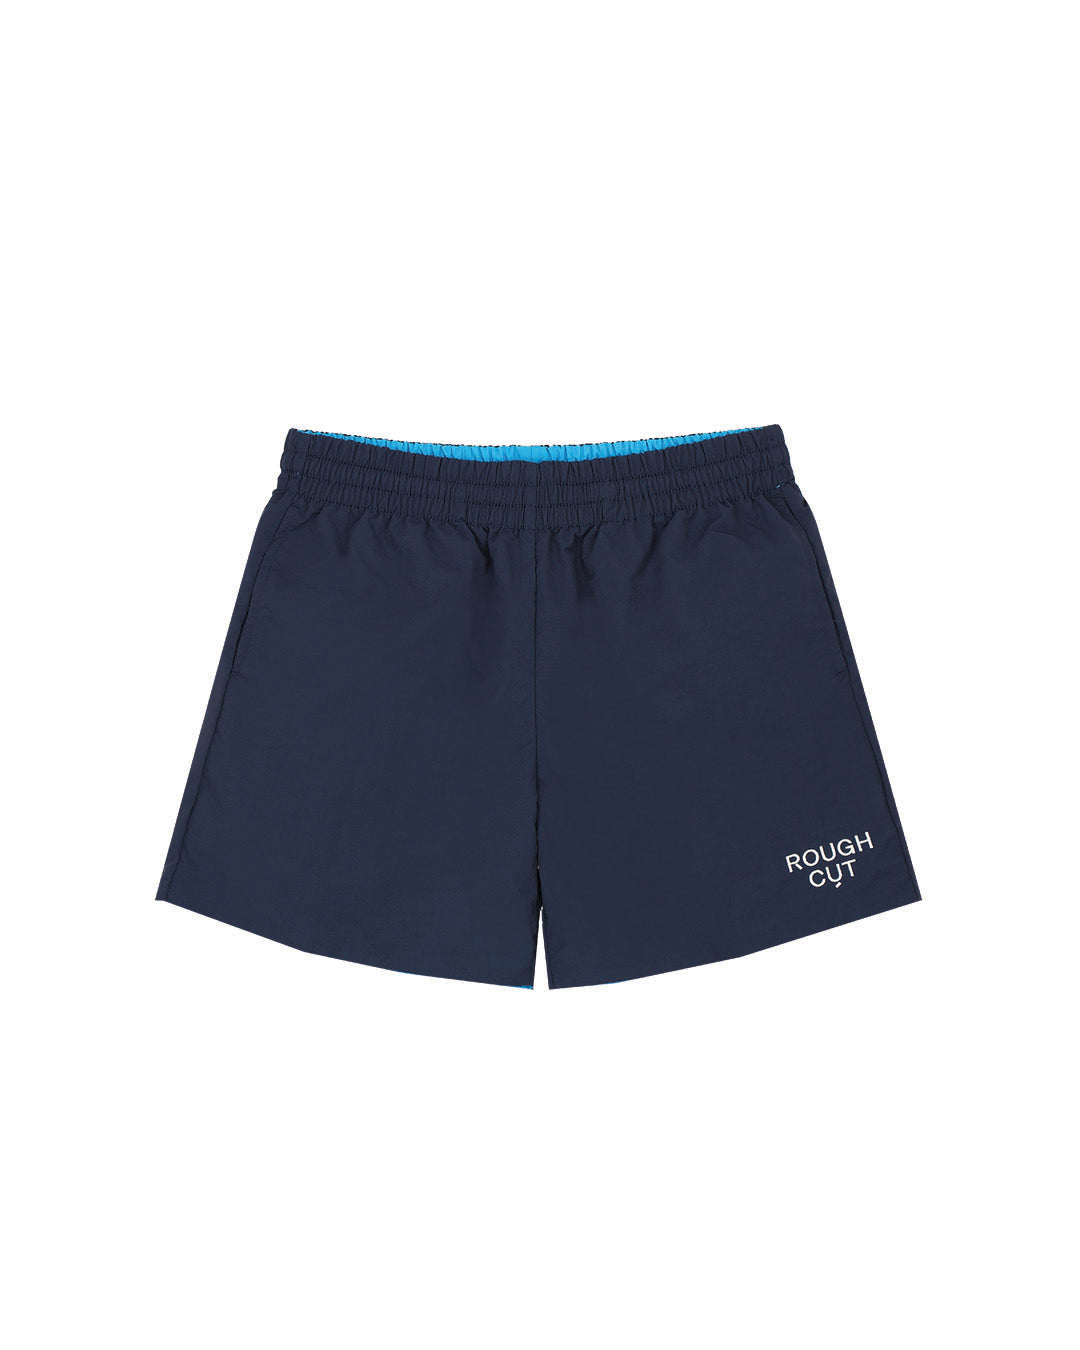 Reversible Shorts®  / Navy + Blue